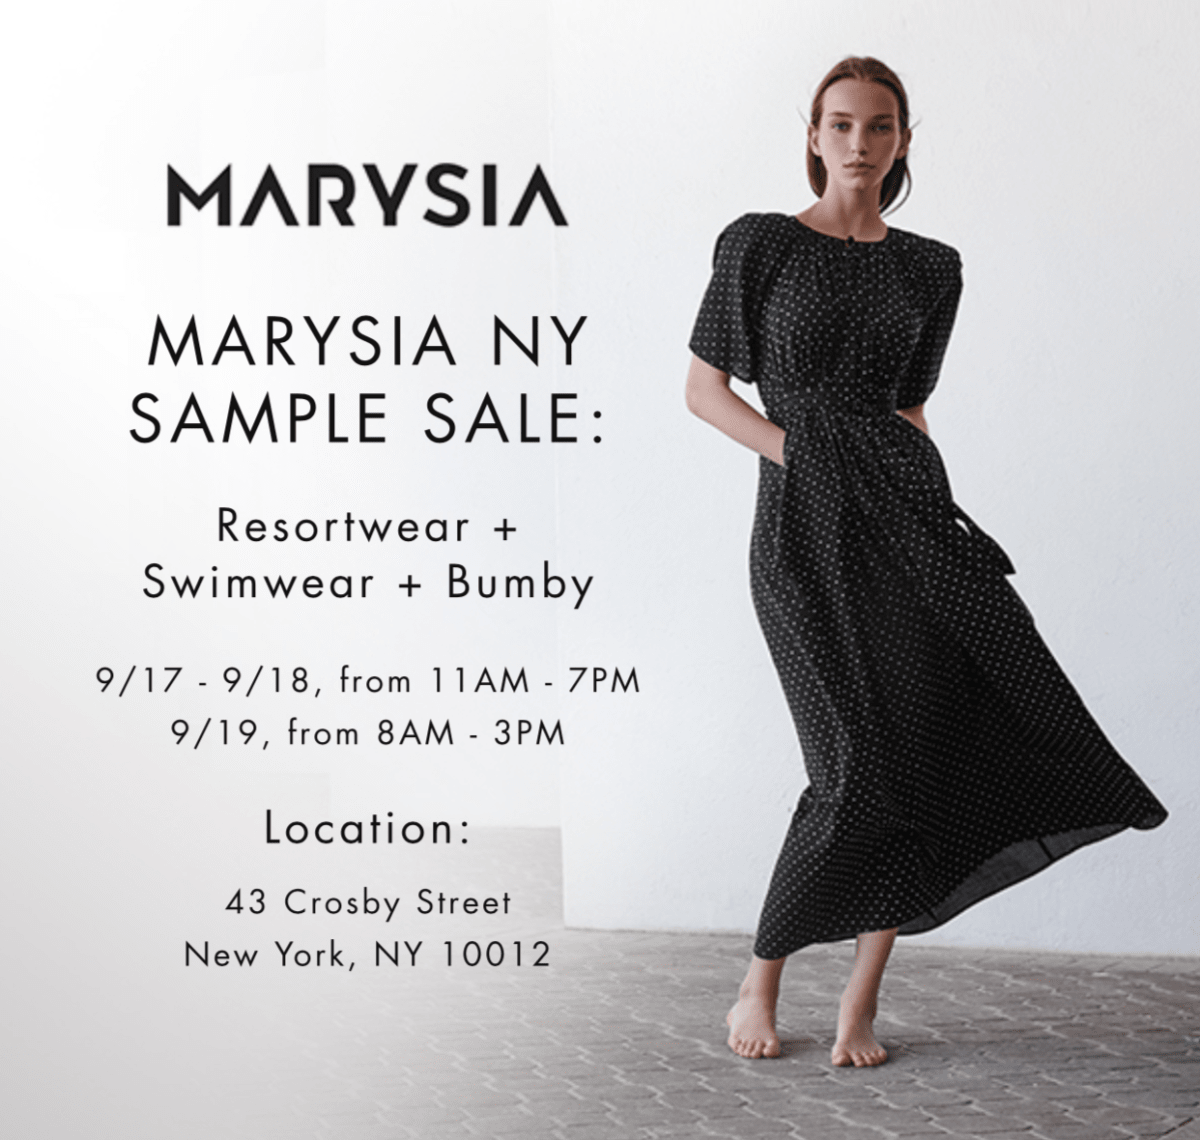 Marysia Sample Sale, Sept. 17 - 19, New York